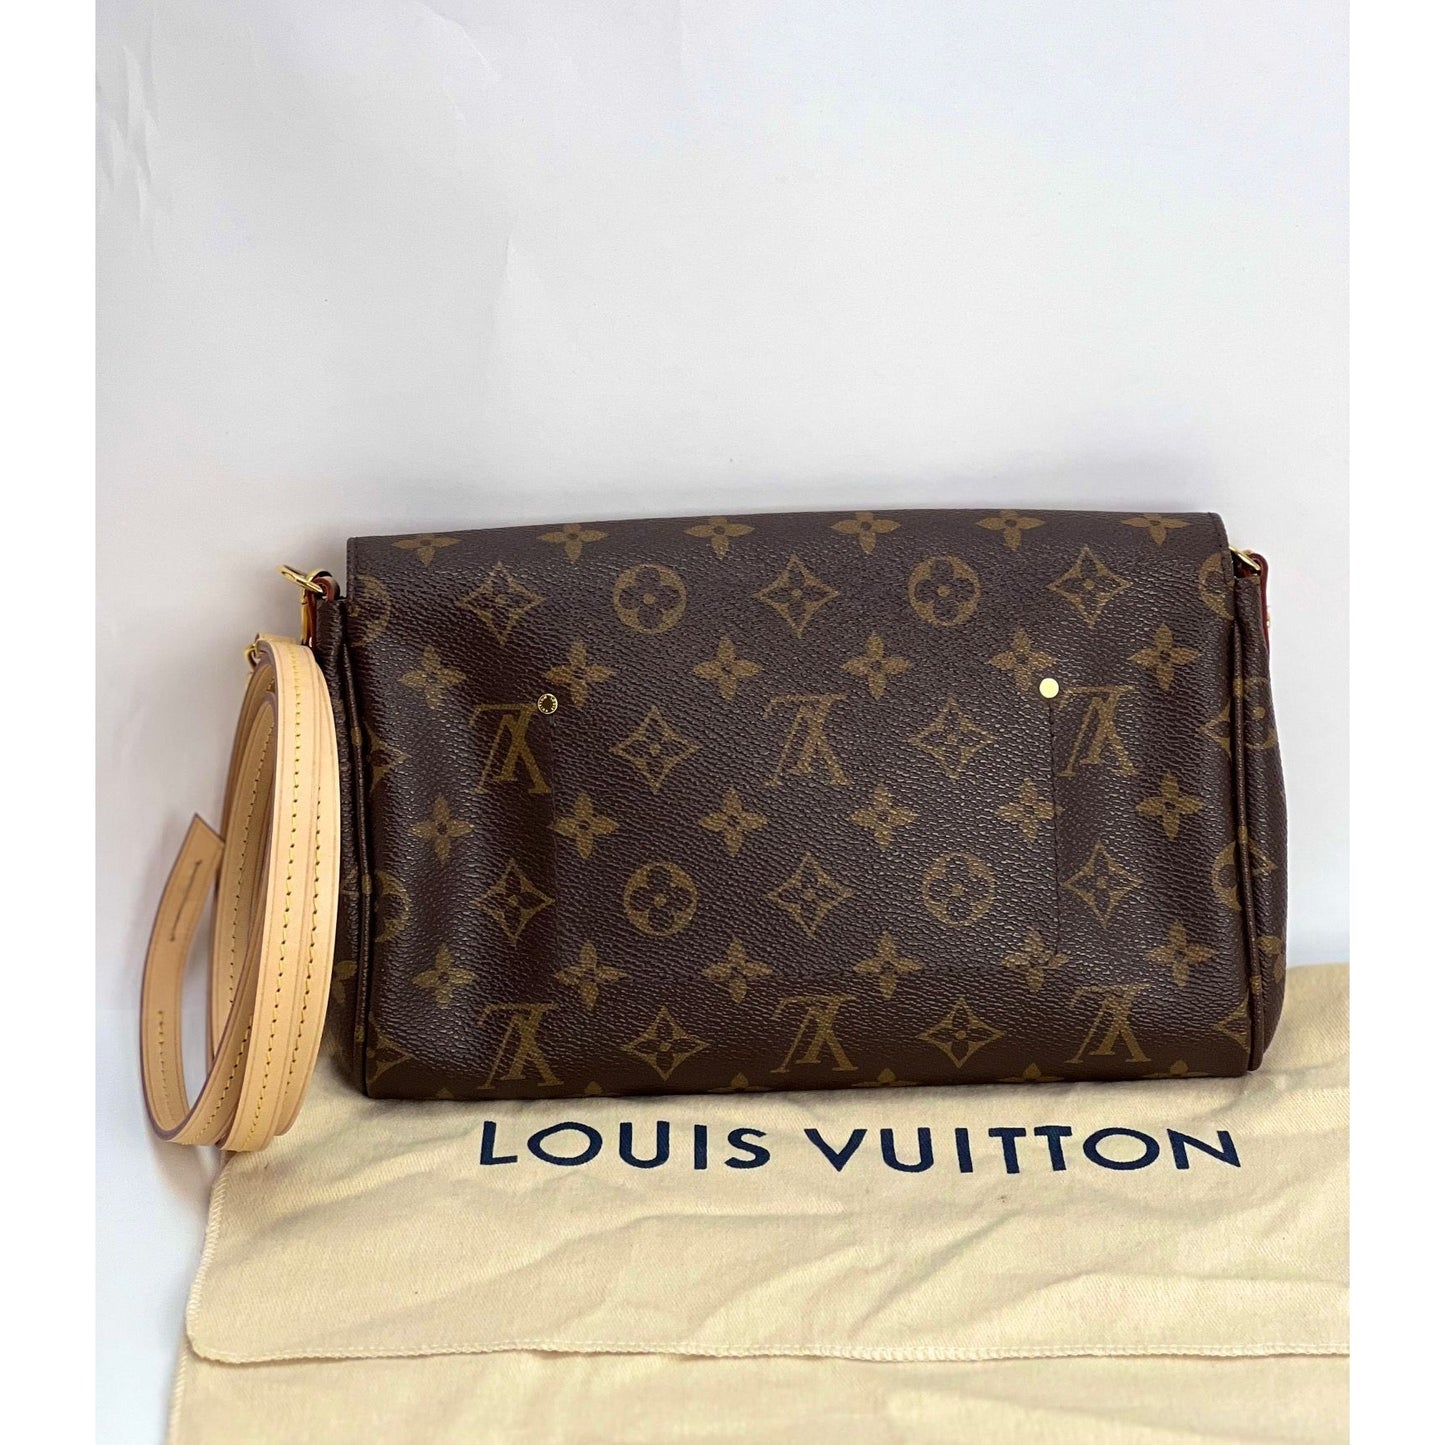 Louis Vuitton Pallas Clutch/Crossbody Bag in Monogram Canvas